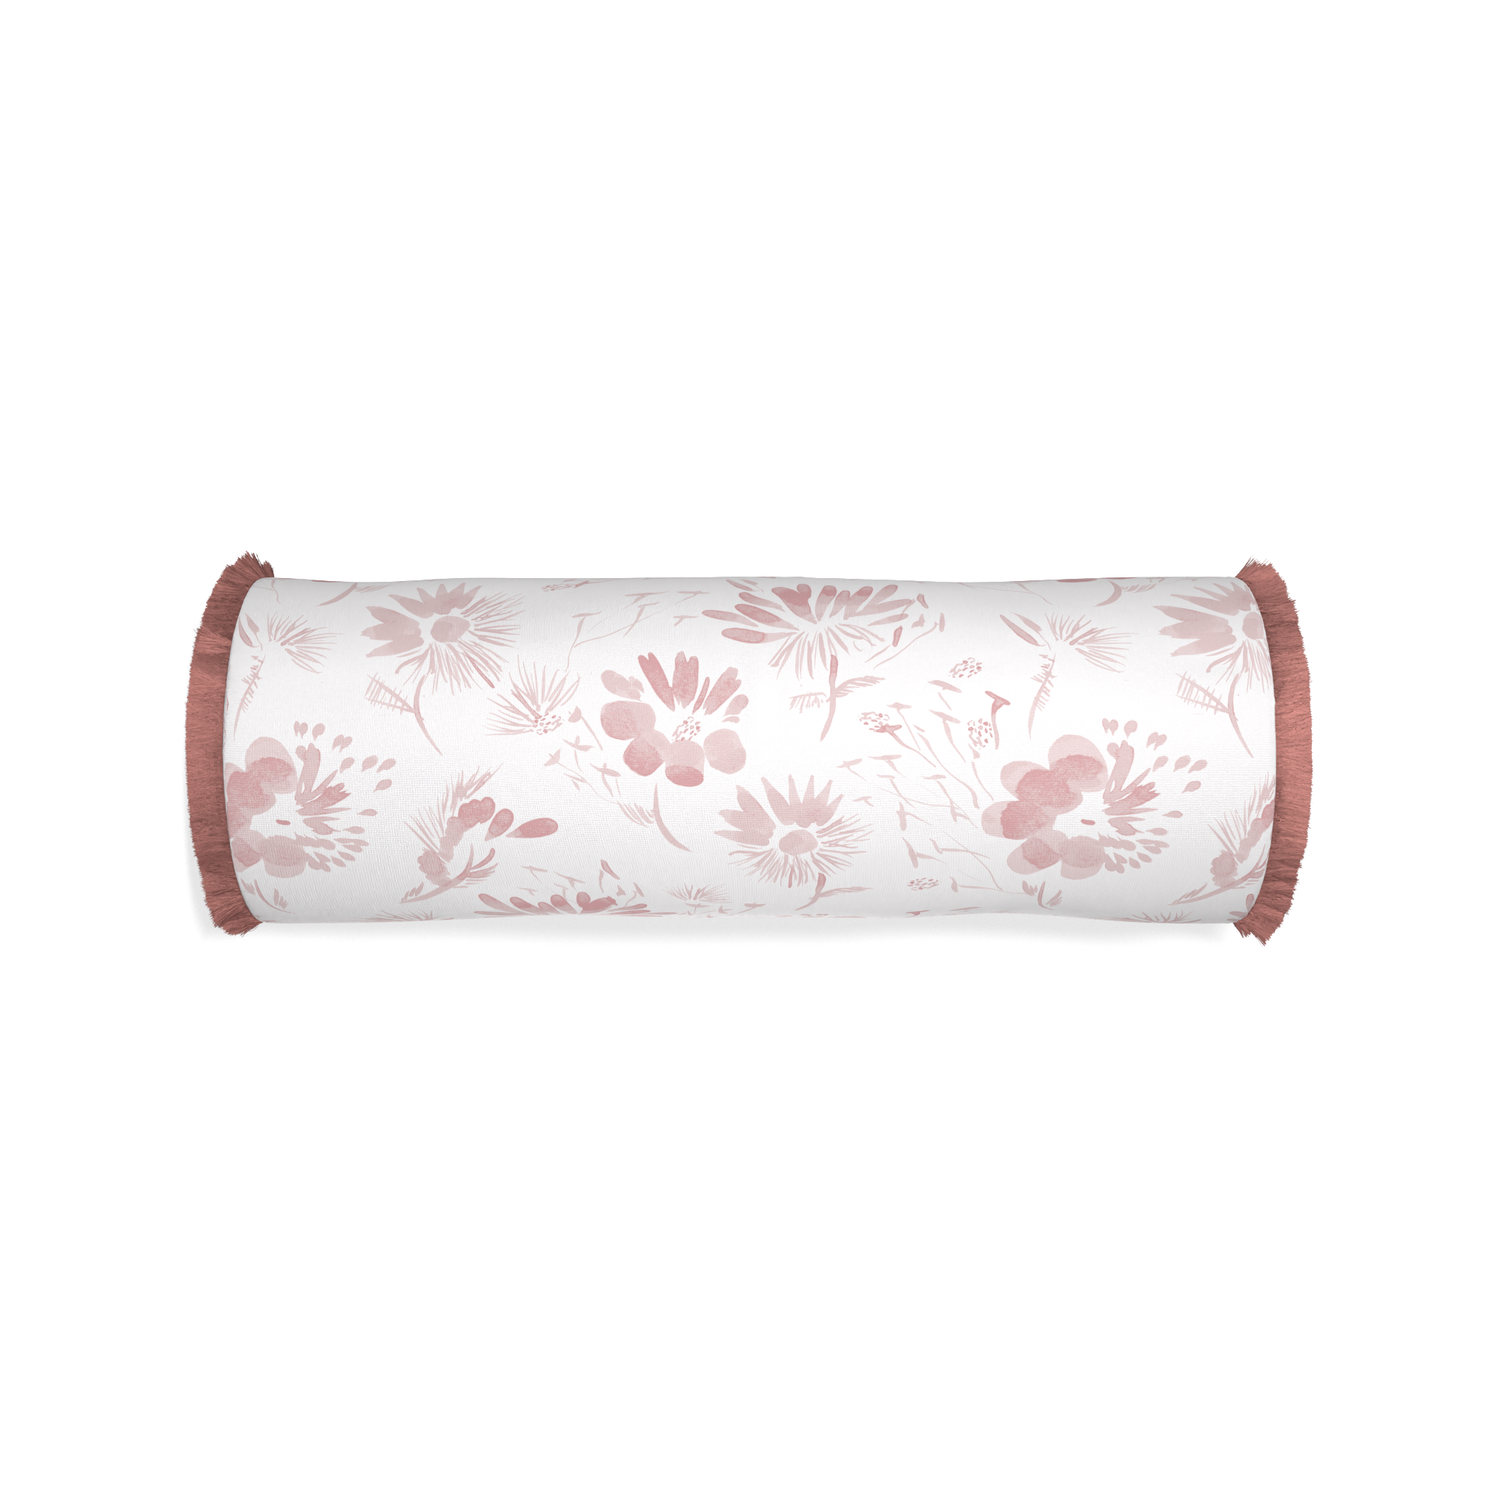 Bolster blake custom pink floralpillow with d fringe on white background